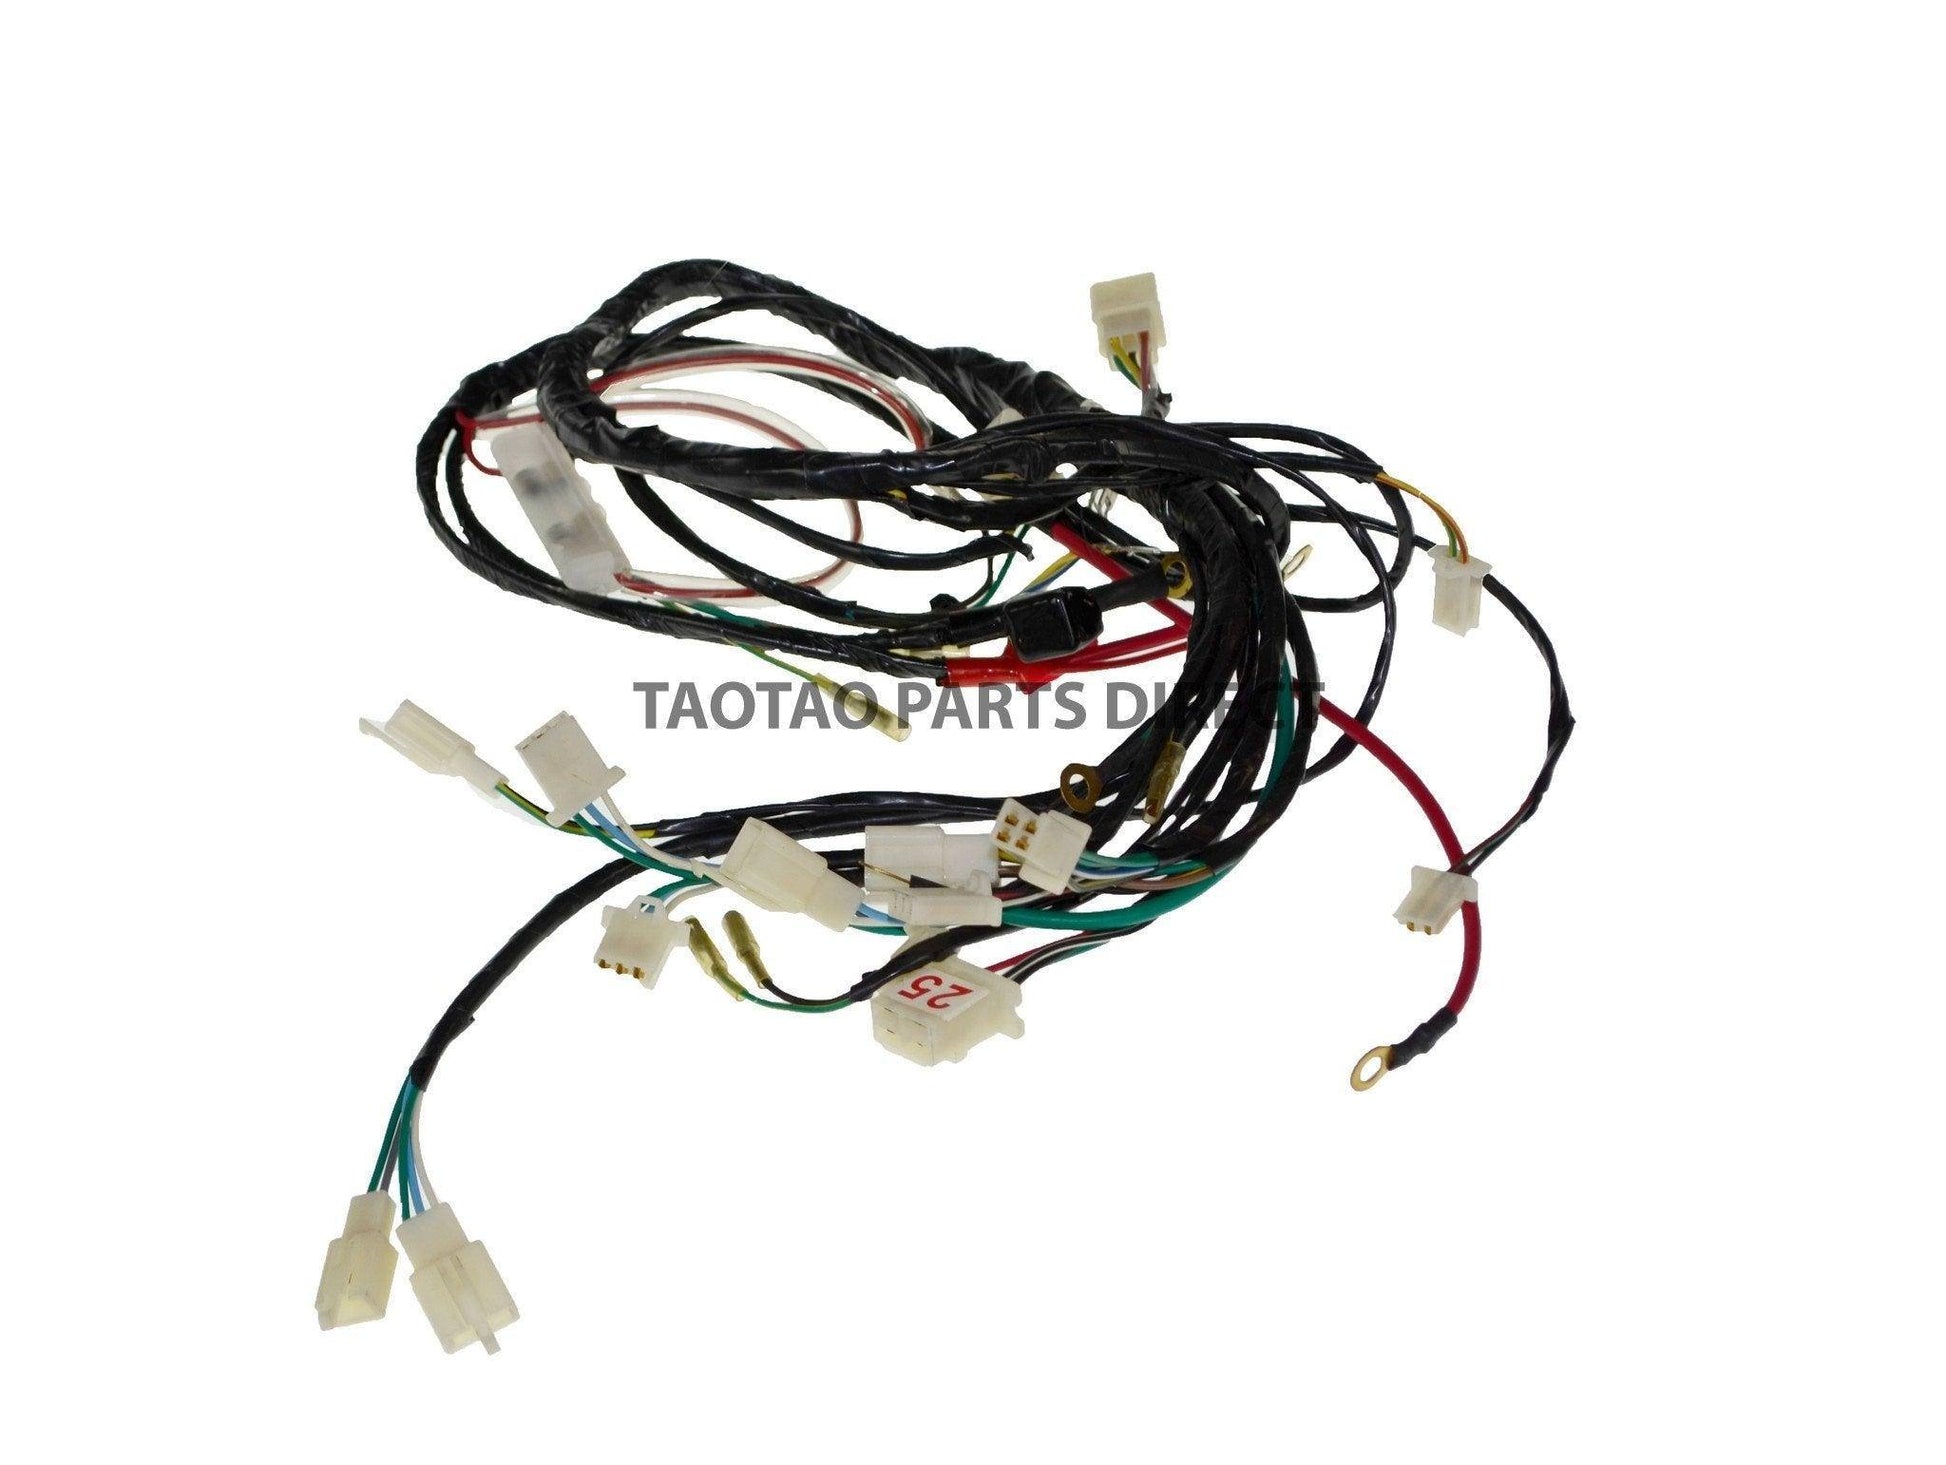 ATA250D Wire Harness #25 - TaoTao Parts Direct